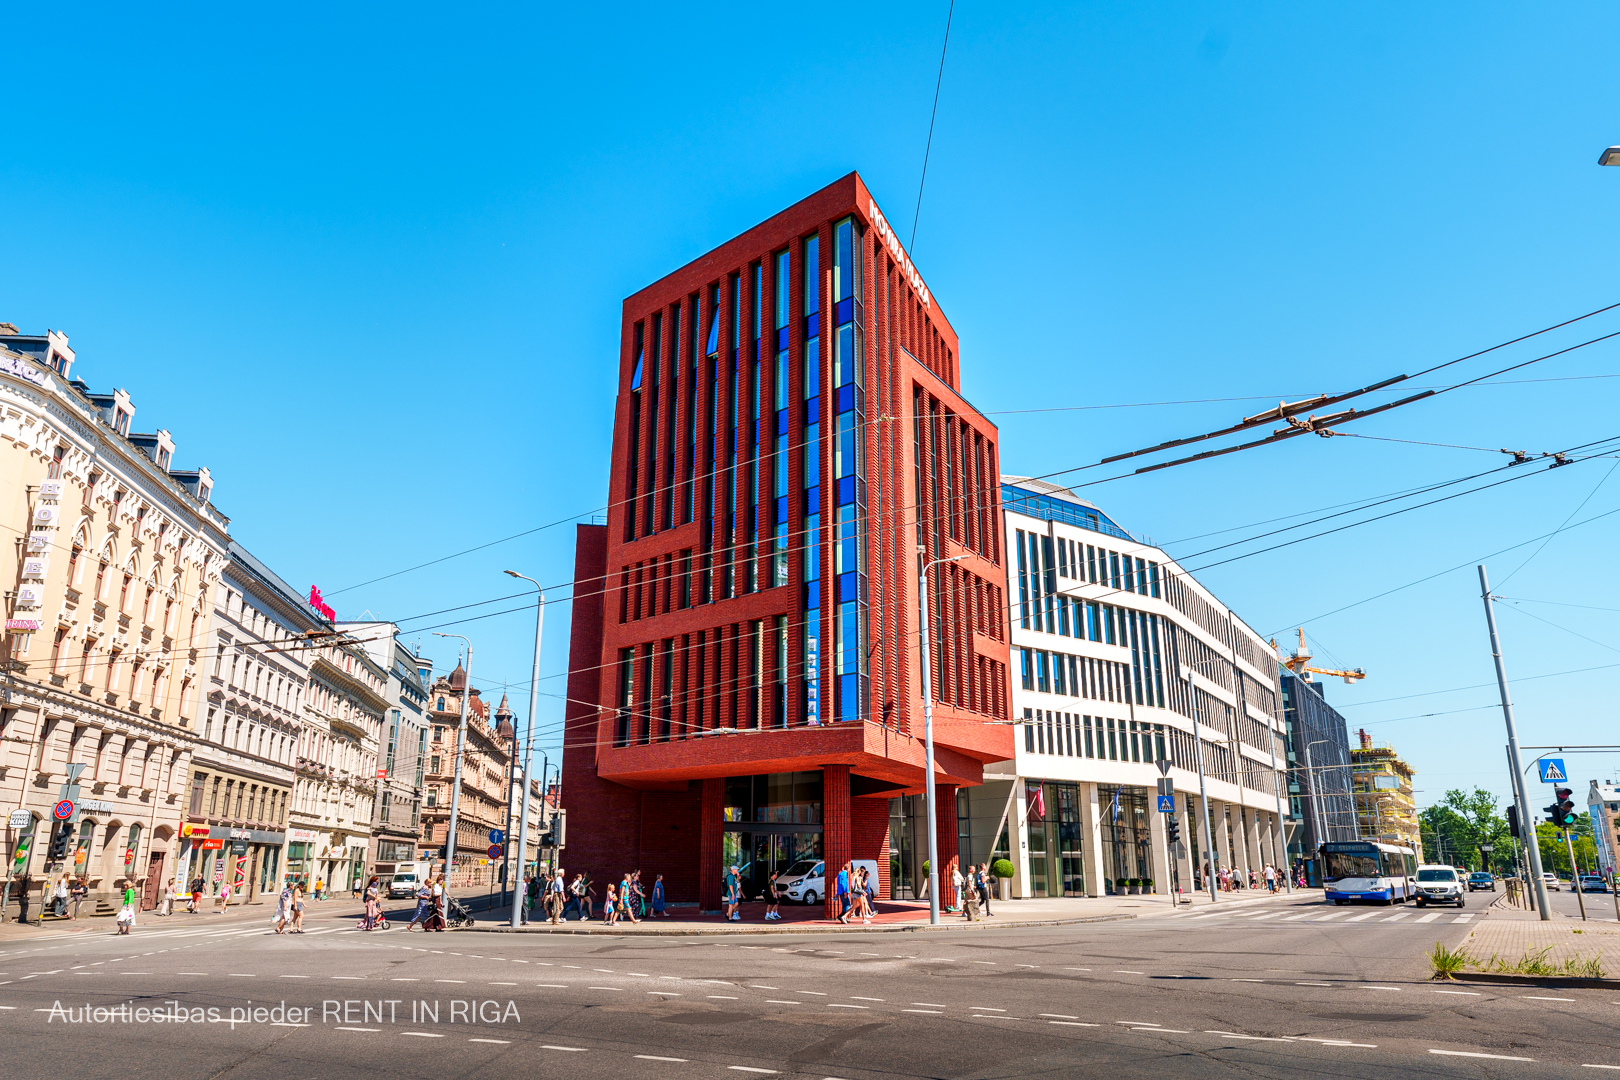 Office for rent, Marijas street - Image 1